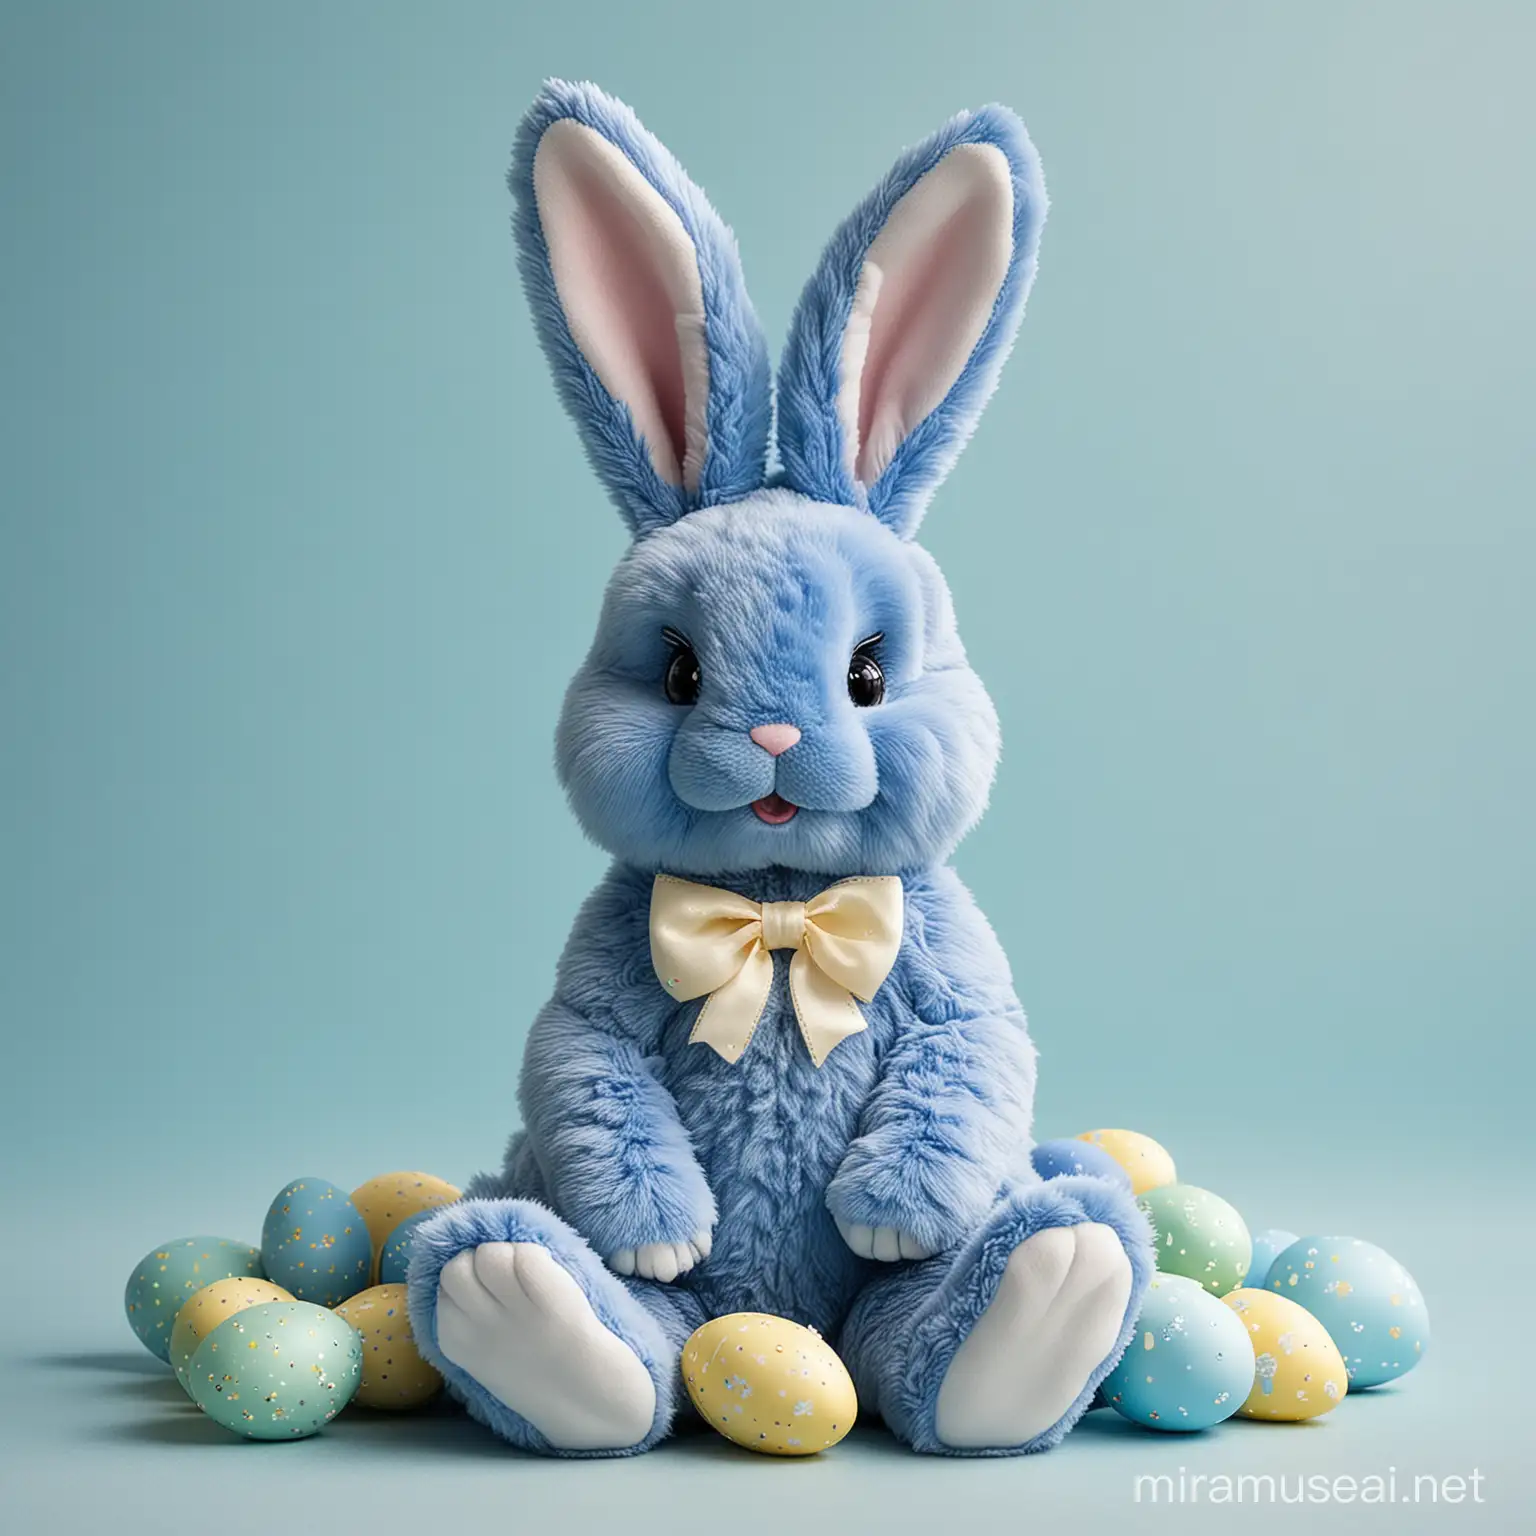 Joyful Easter Blue Bunny with Festive Decorations